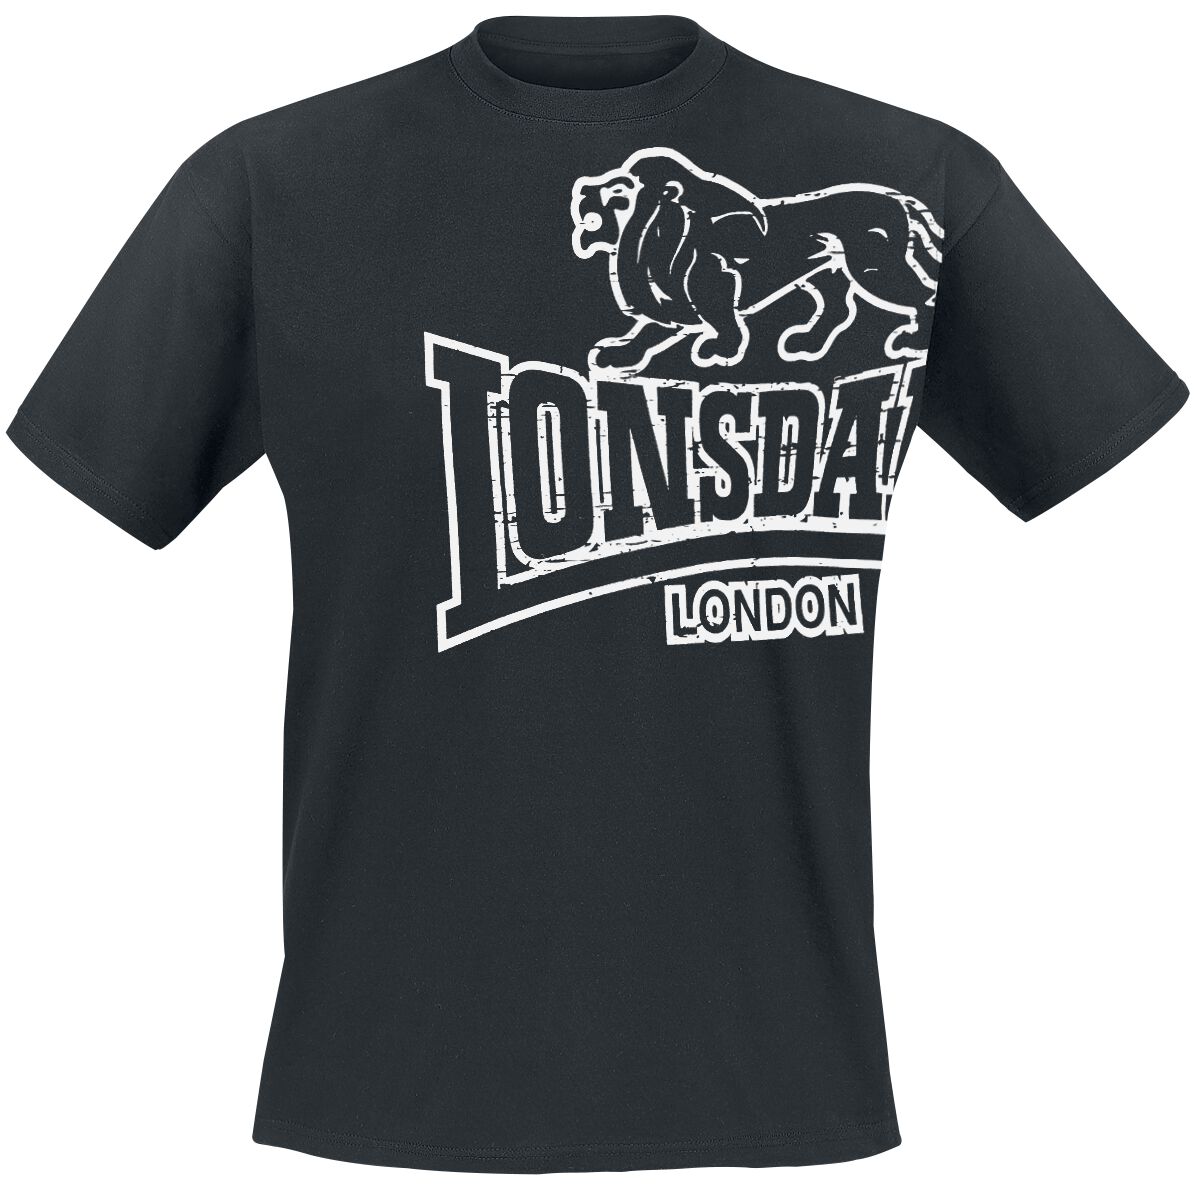 Lonsdale London Langsett T-Shirt schwarz in XL von Lonsdale London